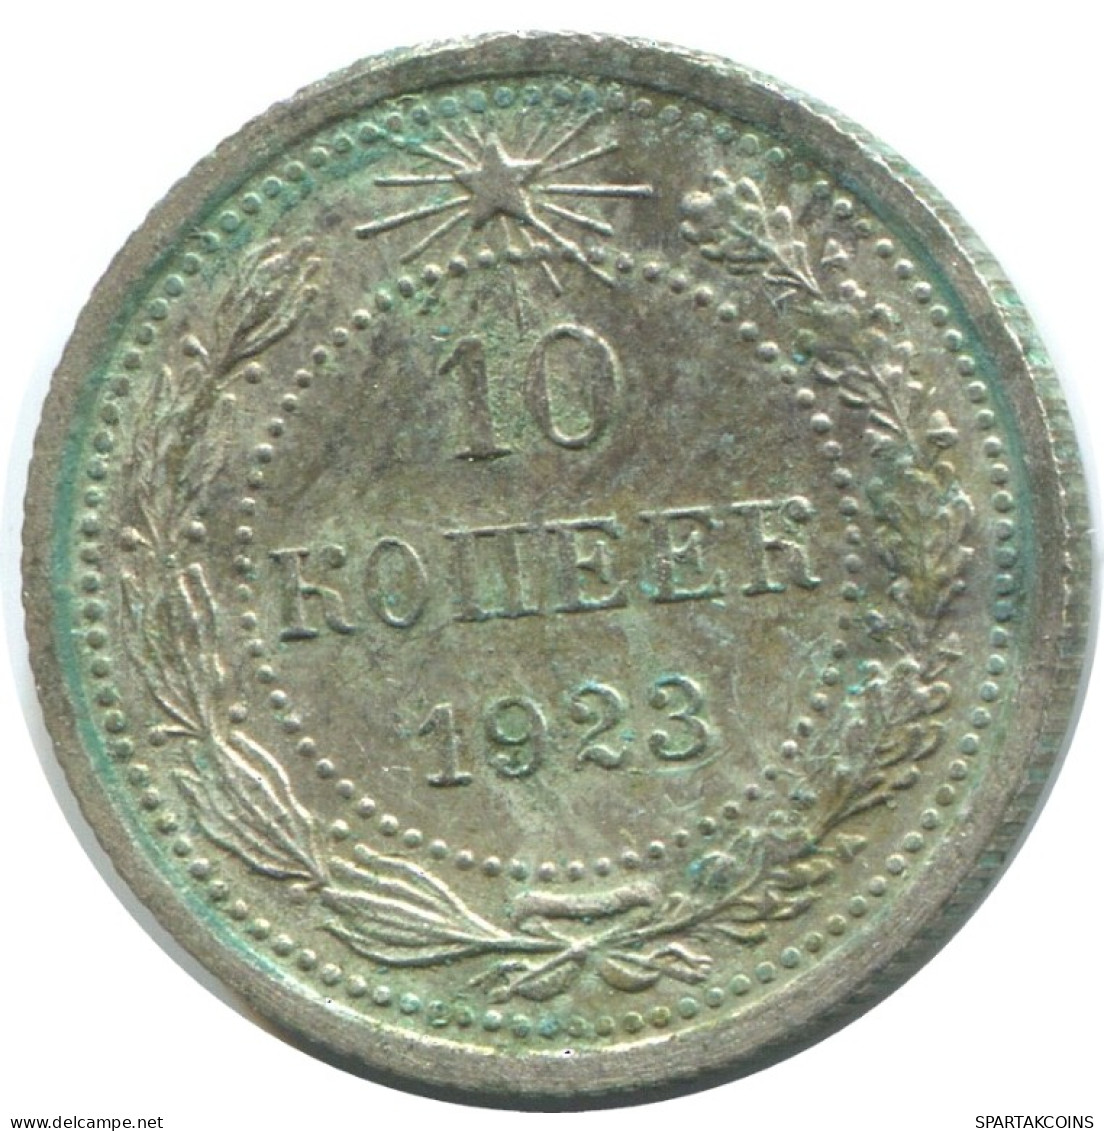 10 KOPEKS 1923 RUSSIA RSFSR SILVER Coin HIGH GRADE #AF012.4.U.A - Russia